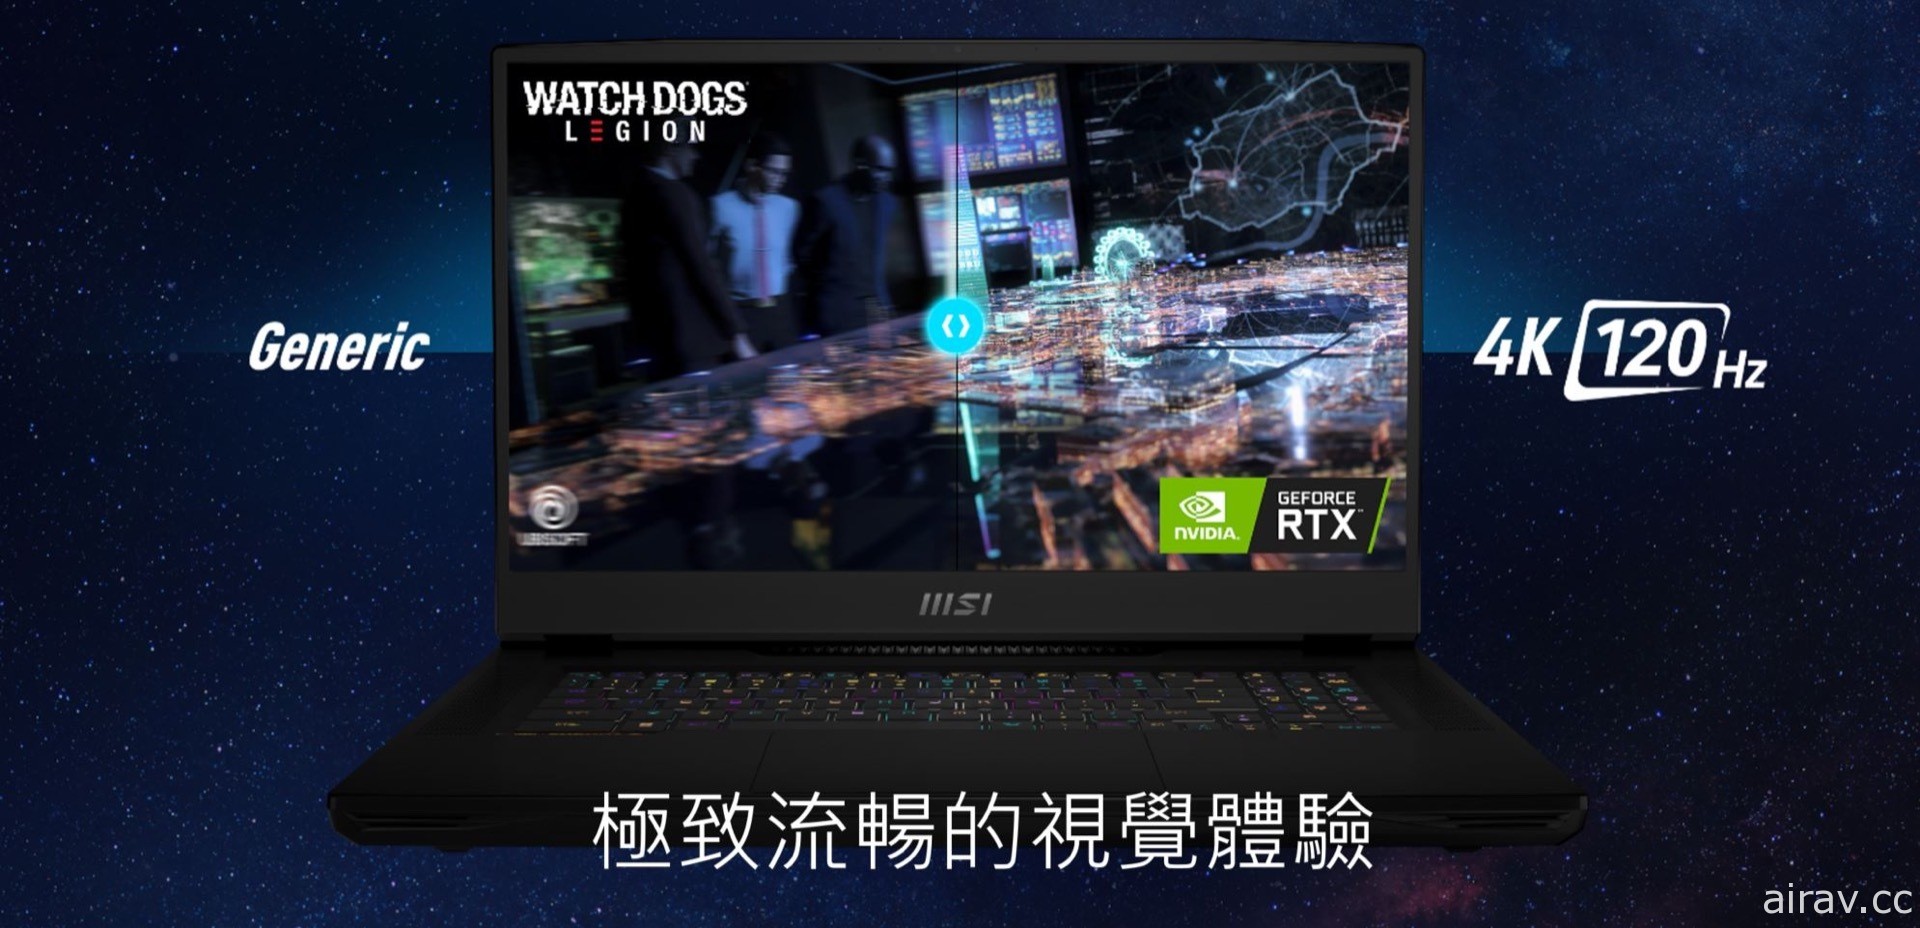 MSI 發表全新旗艦筆電 Titan GT77 將於台北電腦多媒體展開放搶先體驗